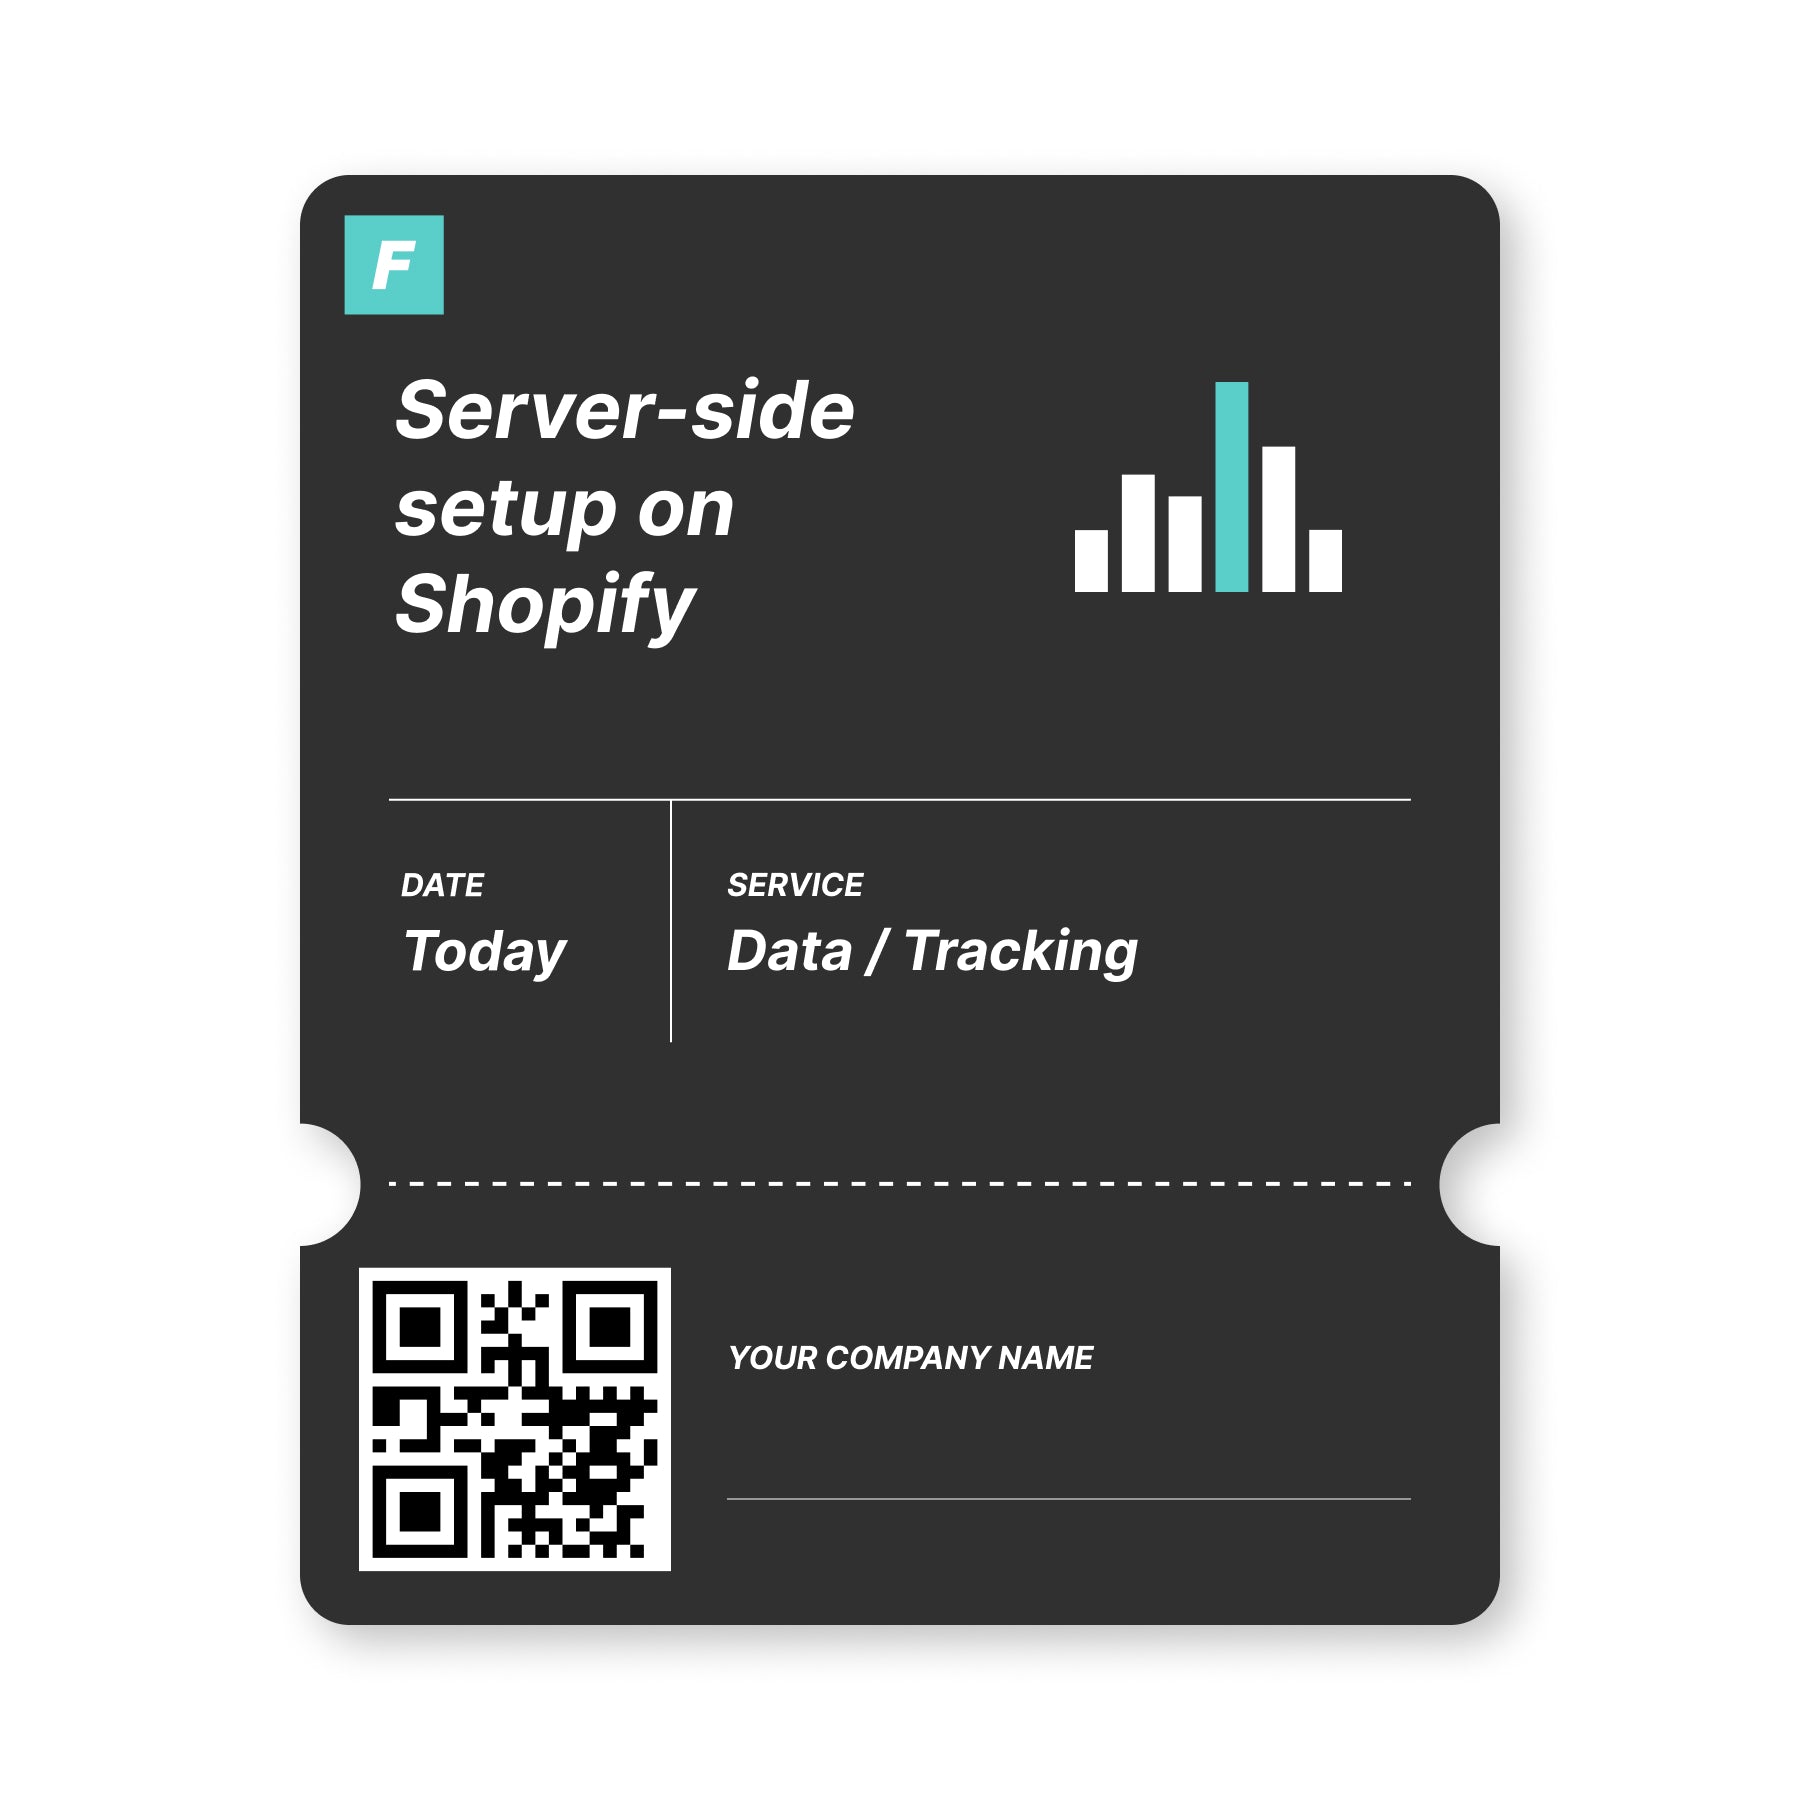 Server-side setup on Shopify